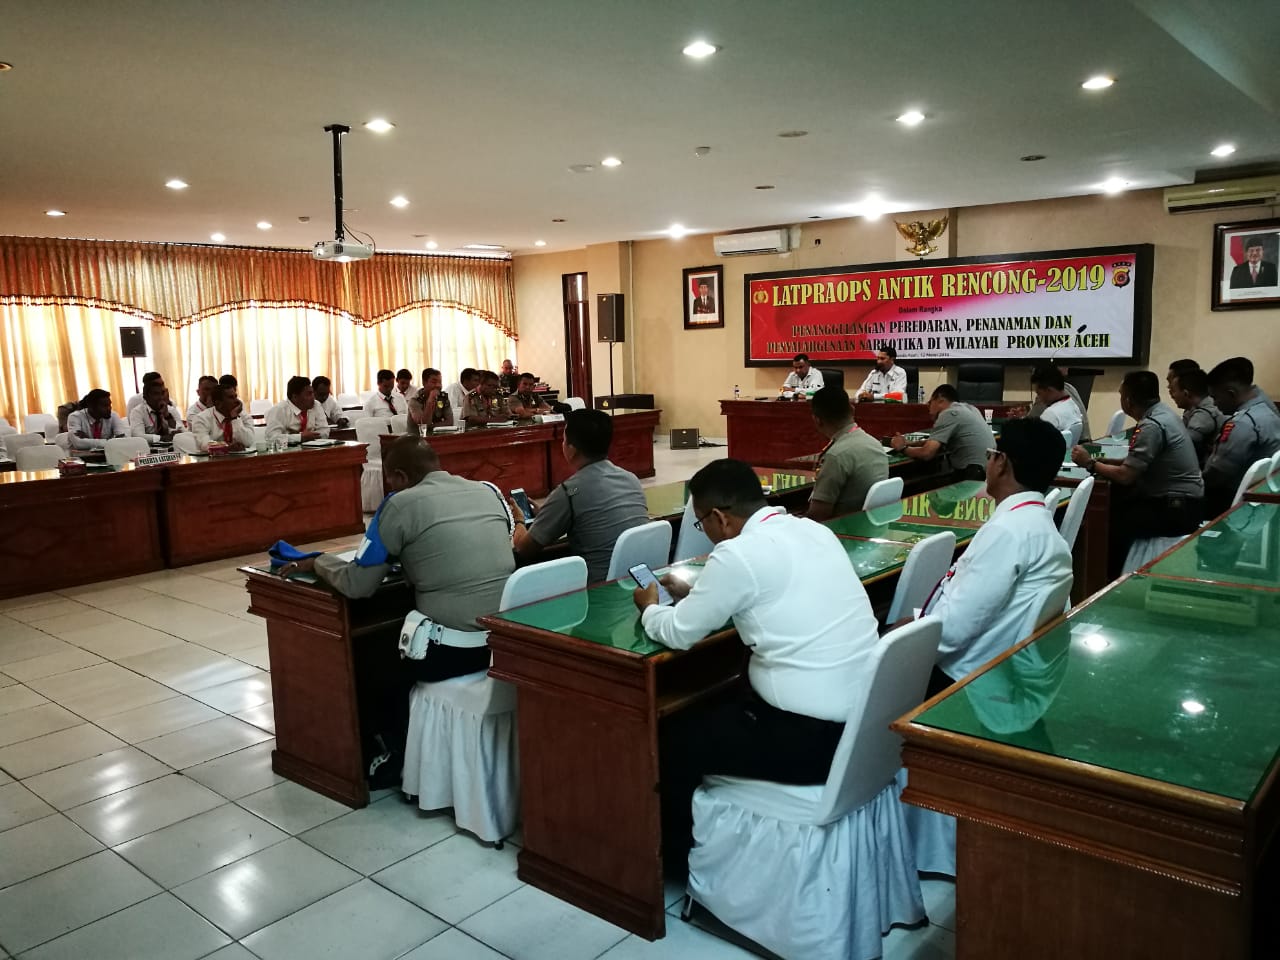 BNNP Aceh, Narasumber Pada Pelatihan Praoperasi Antik Rencong- 2019